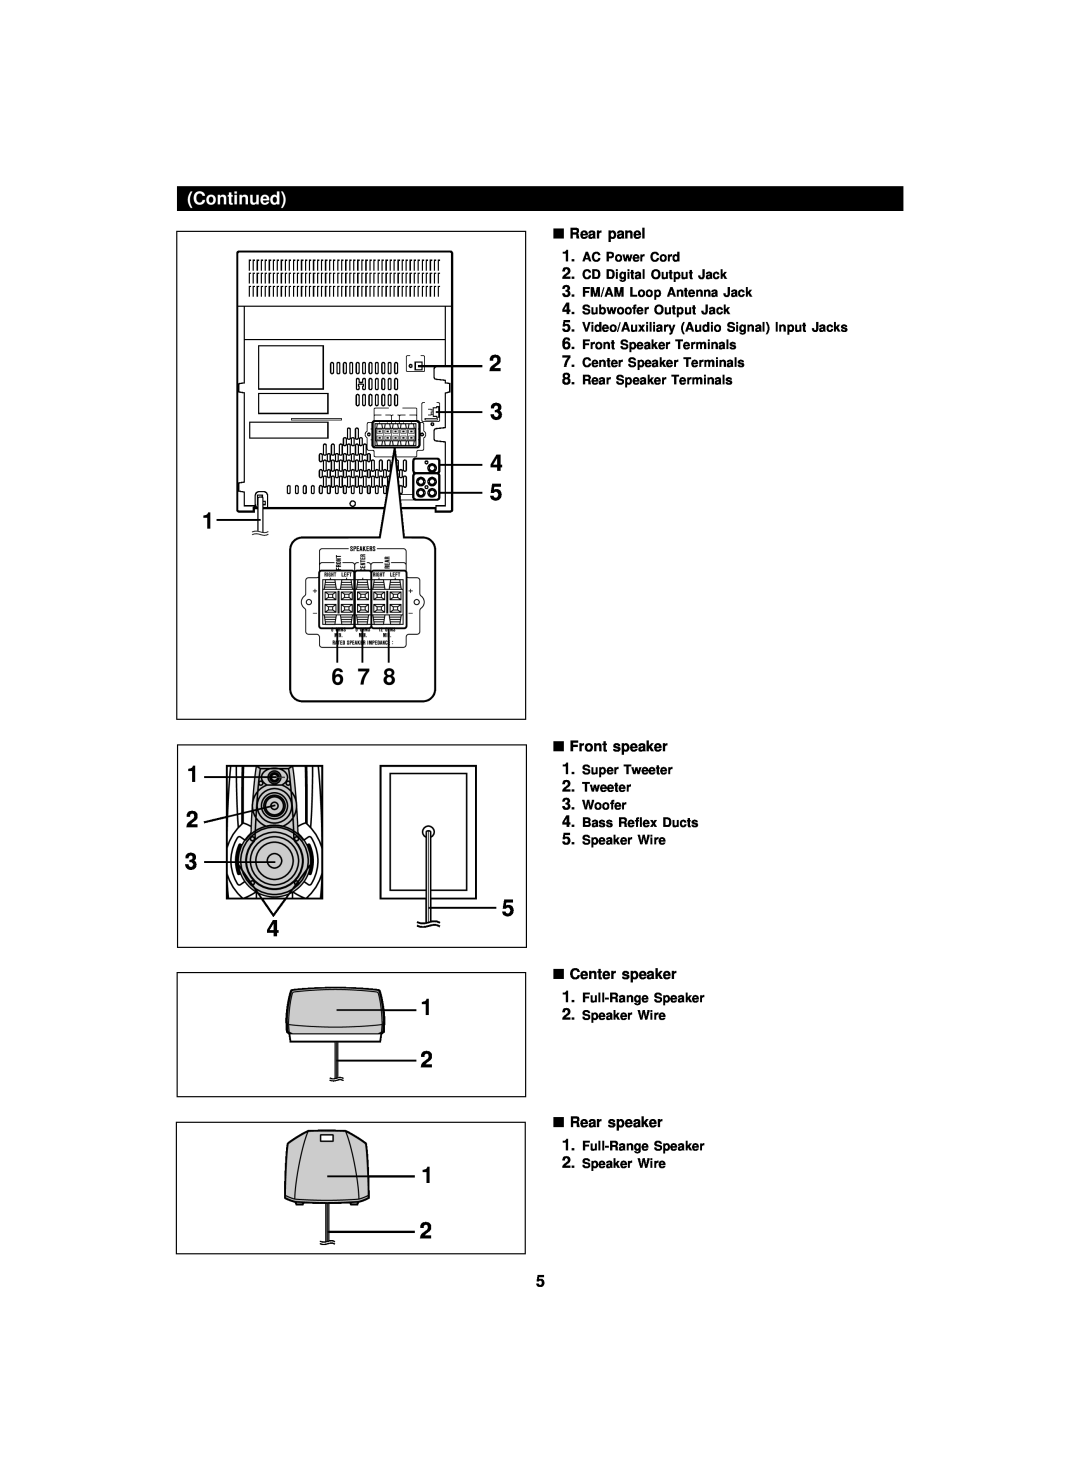 Sharp CD-PC3500 operation manual Continued, Rear panel, Front speaker, Center speaker, Rear speaker 